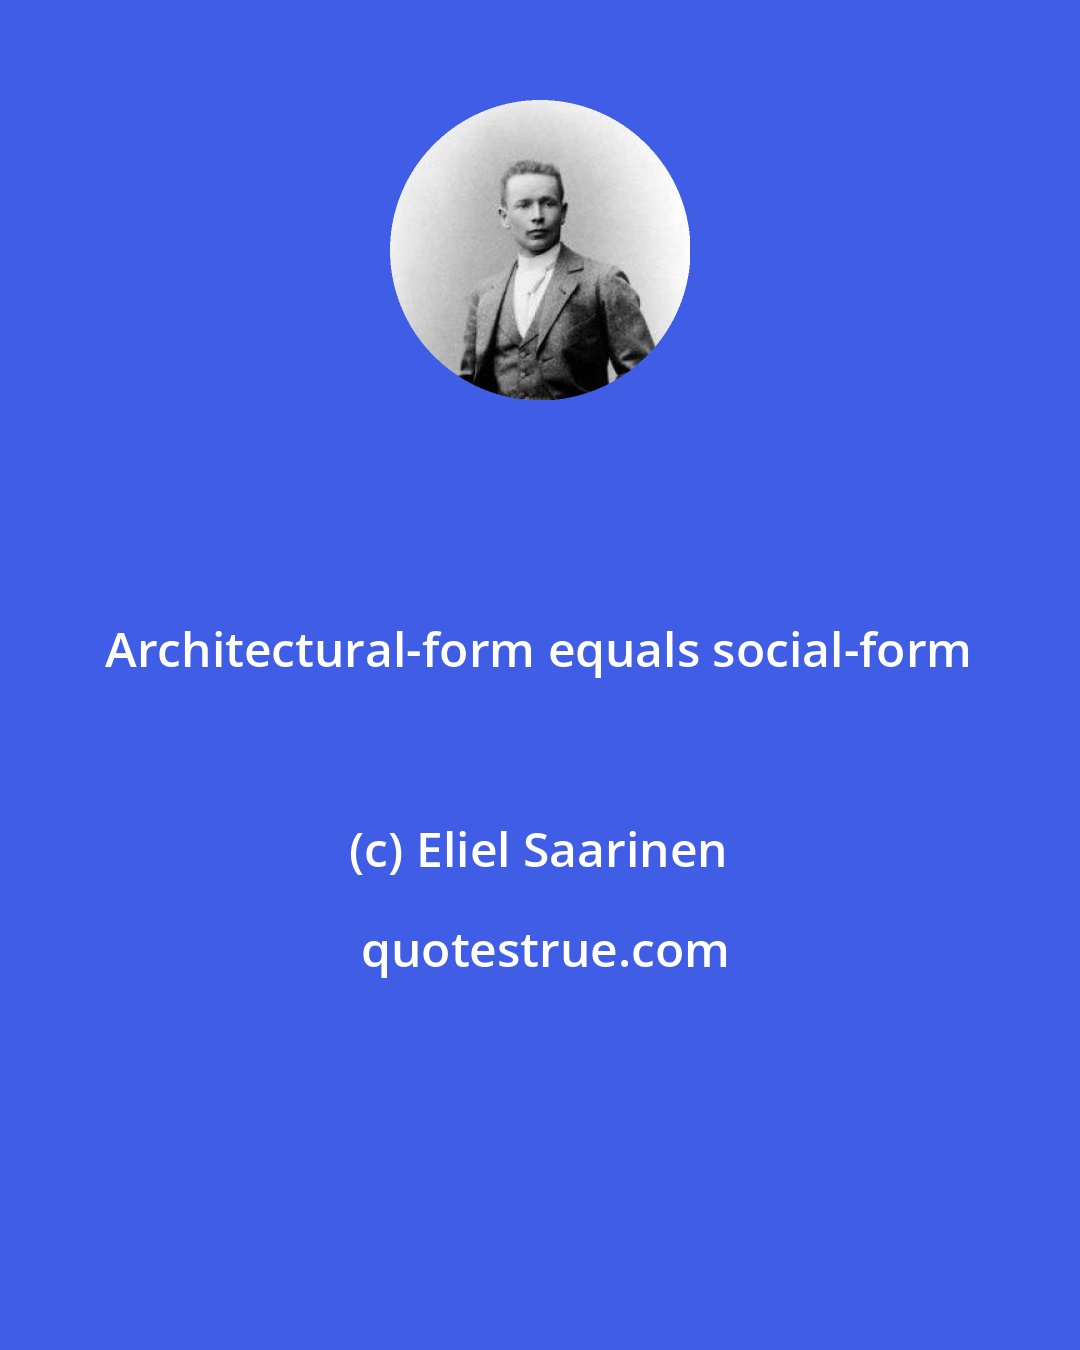 Eliel Saarinen: Architectural-form equals social-form